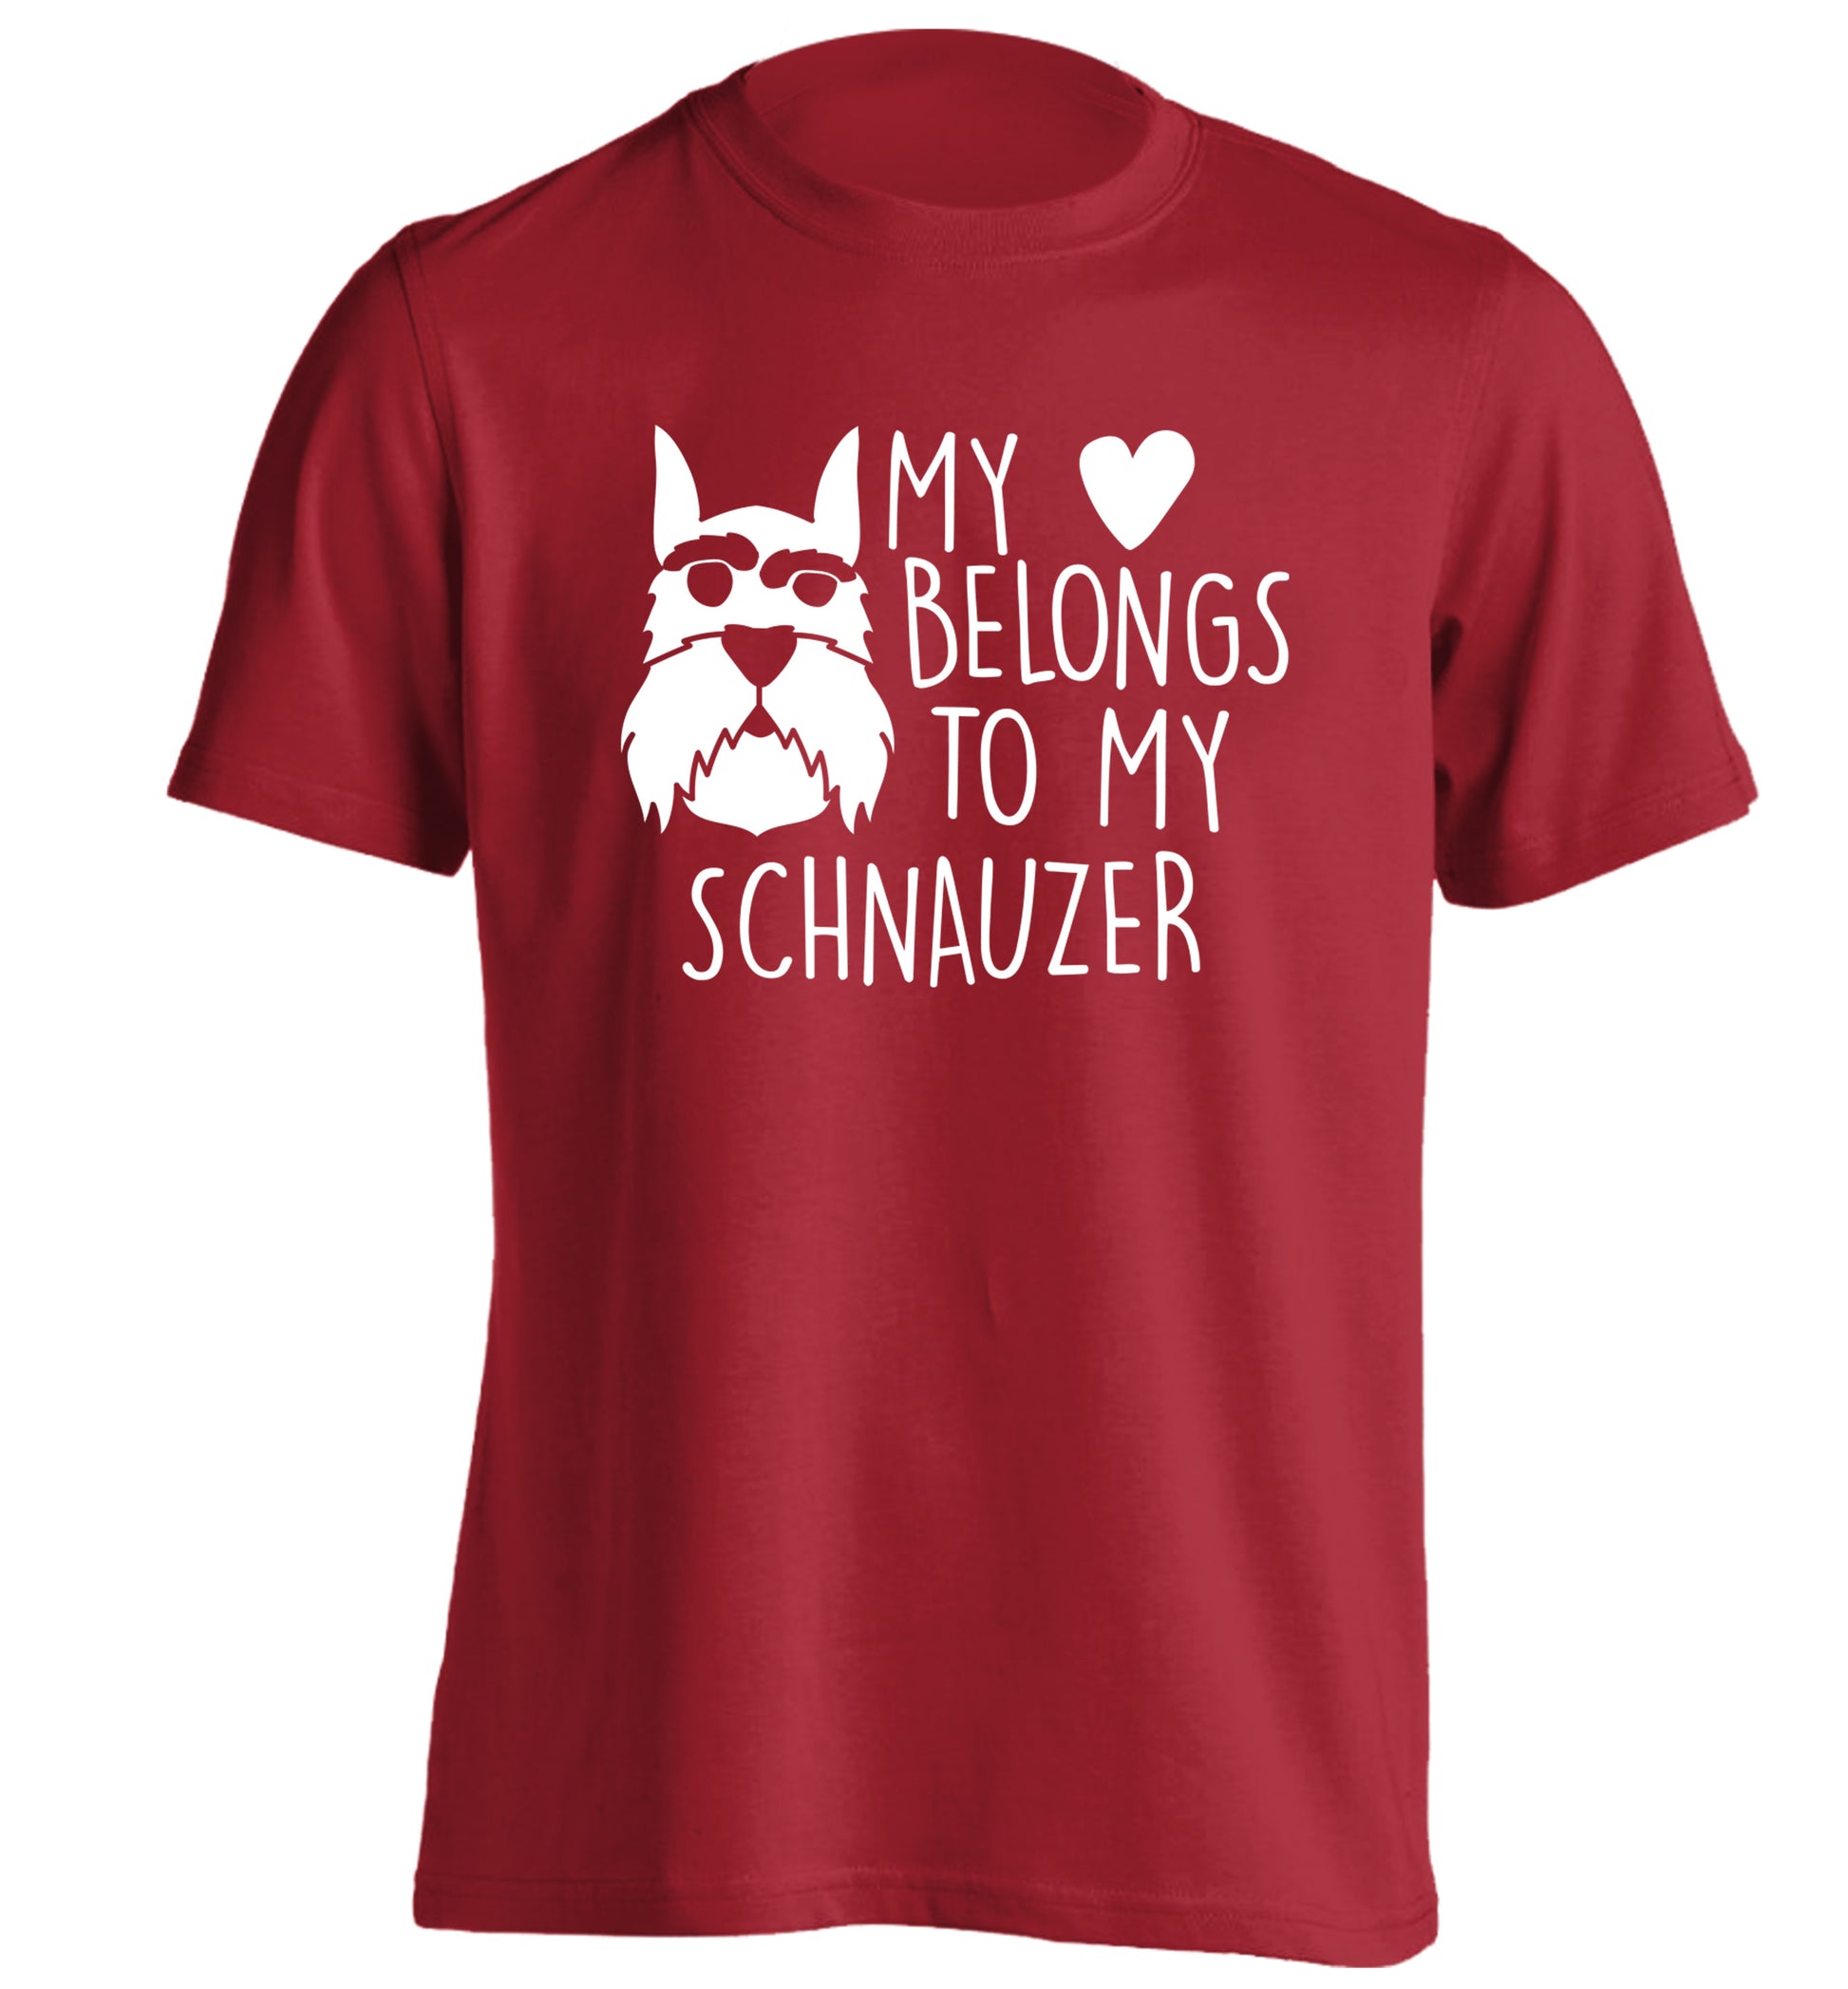 My heart belongs to my schnauzer adults unisex red Tshirt 2XL